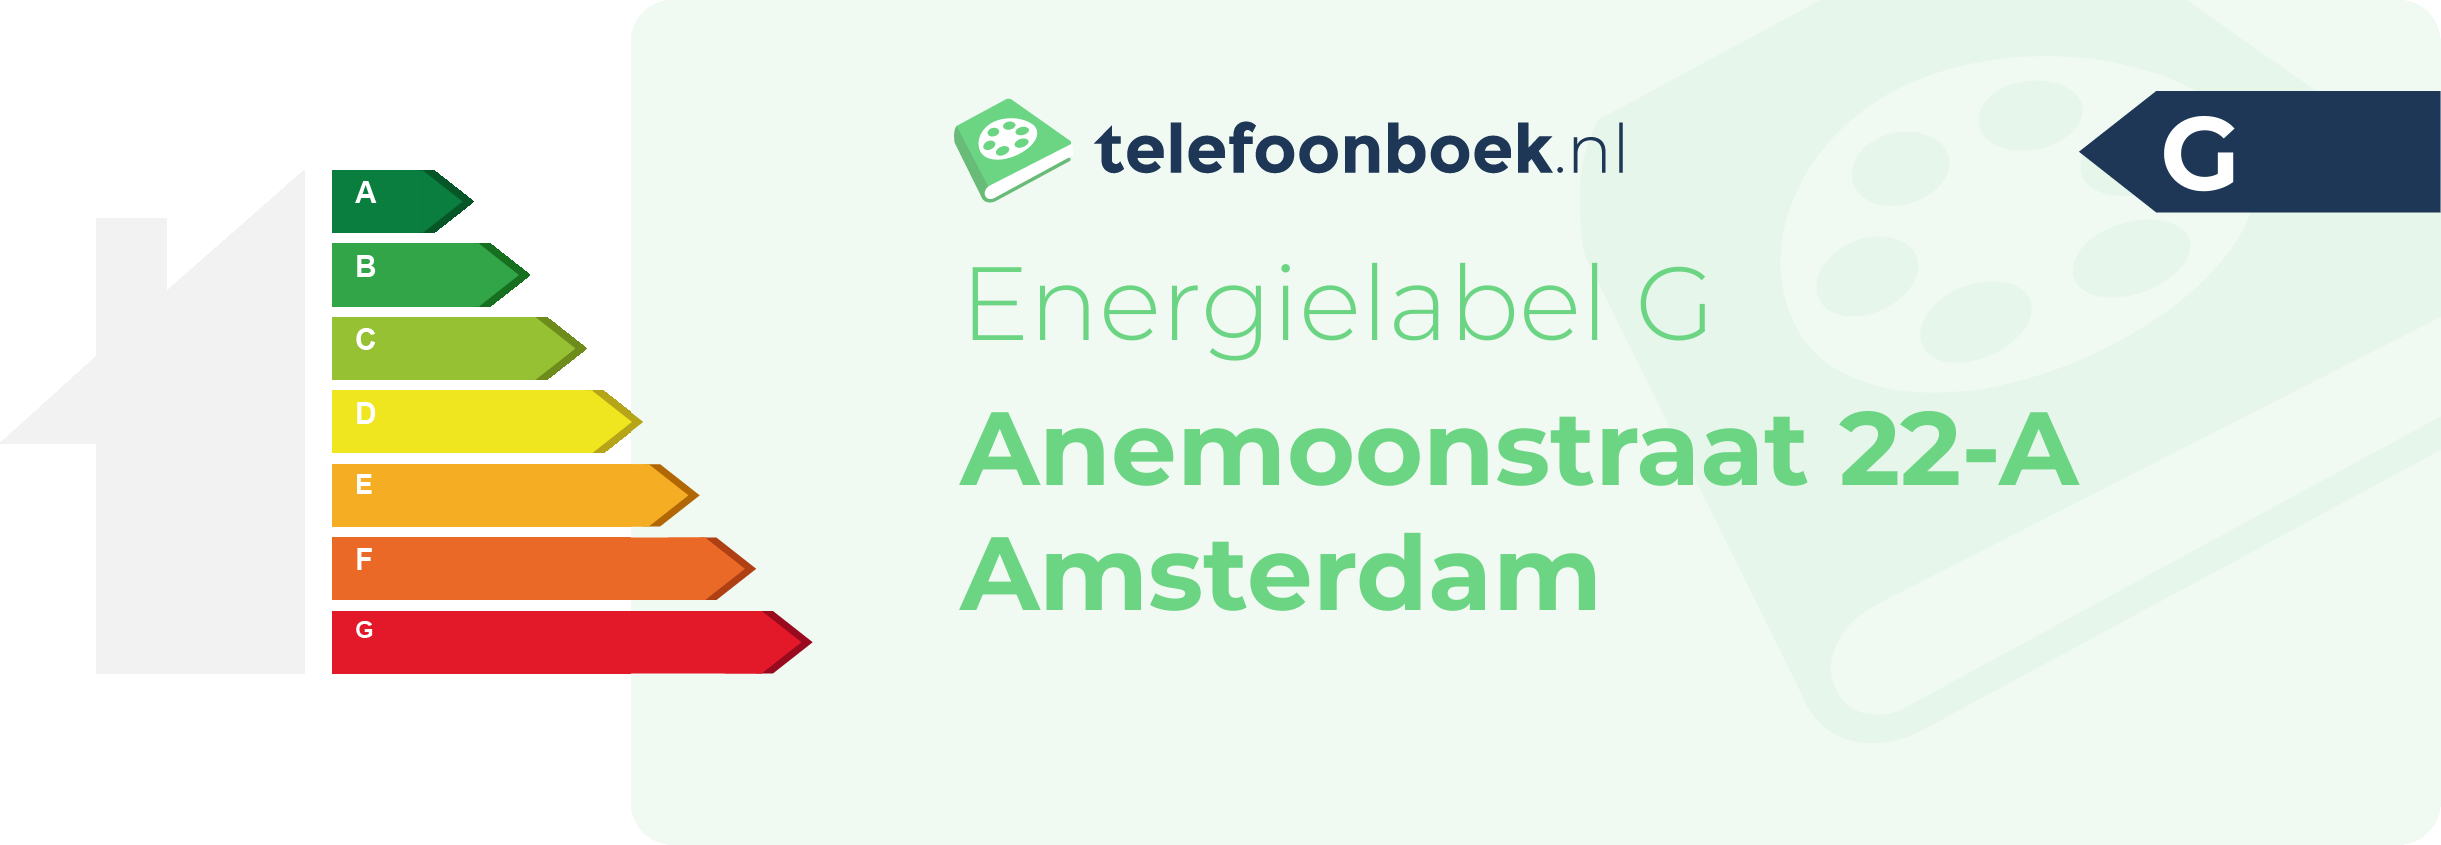 Energielabel Anemoonstraat 22-A Amsterdam